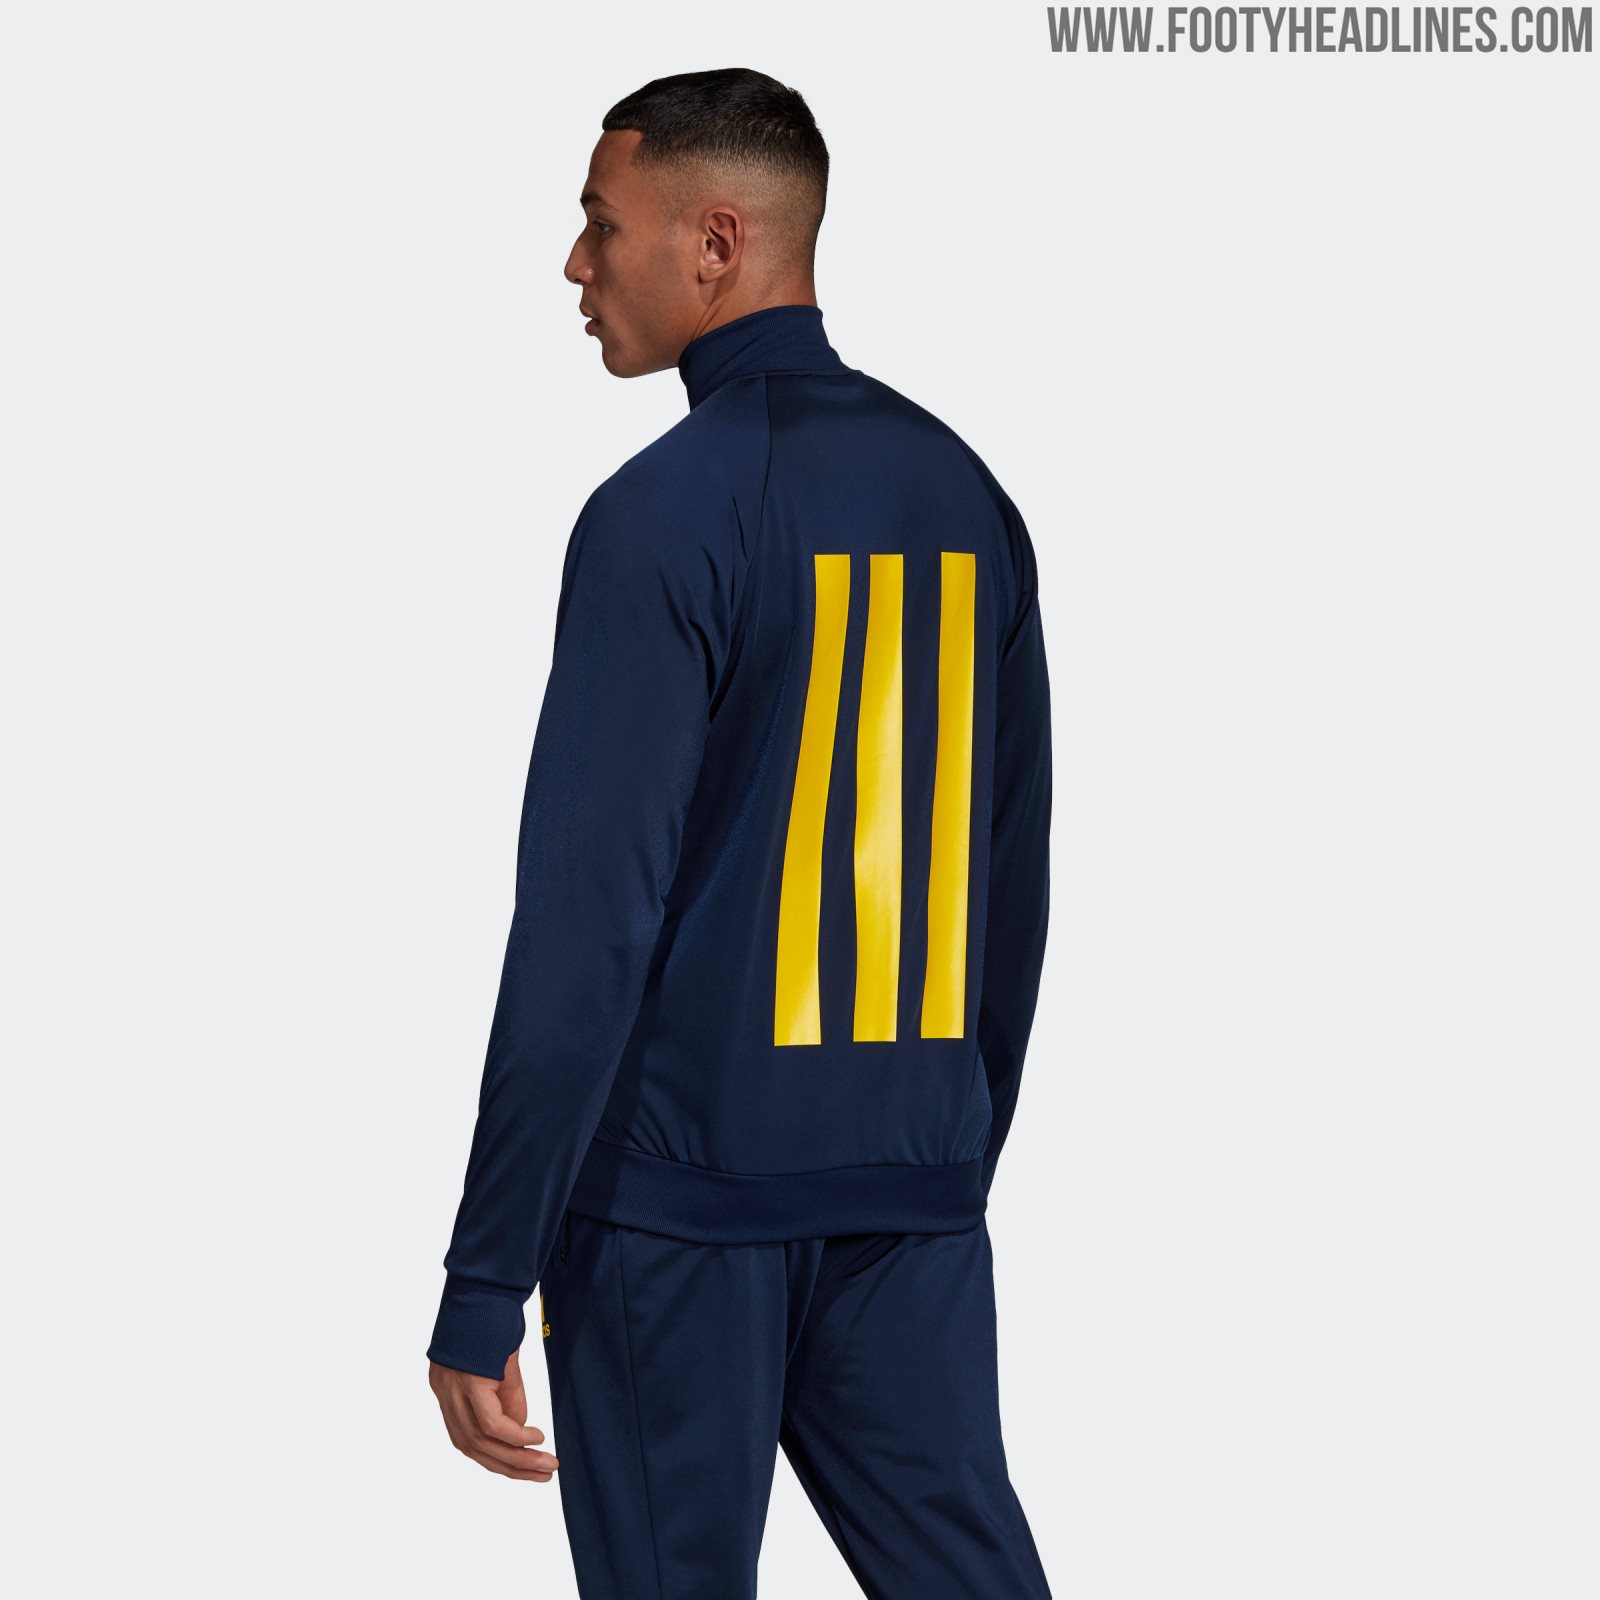 Adidas Arsenal 19-20 Icon Retro Jersey Released + Prototype